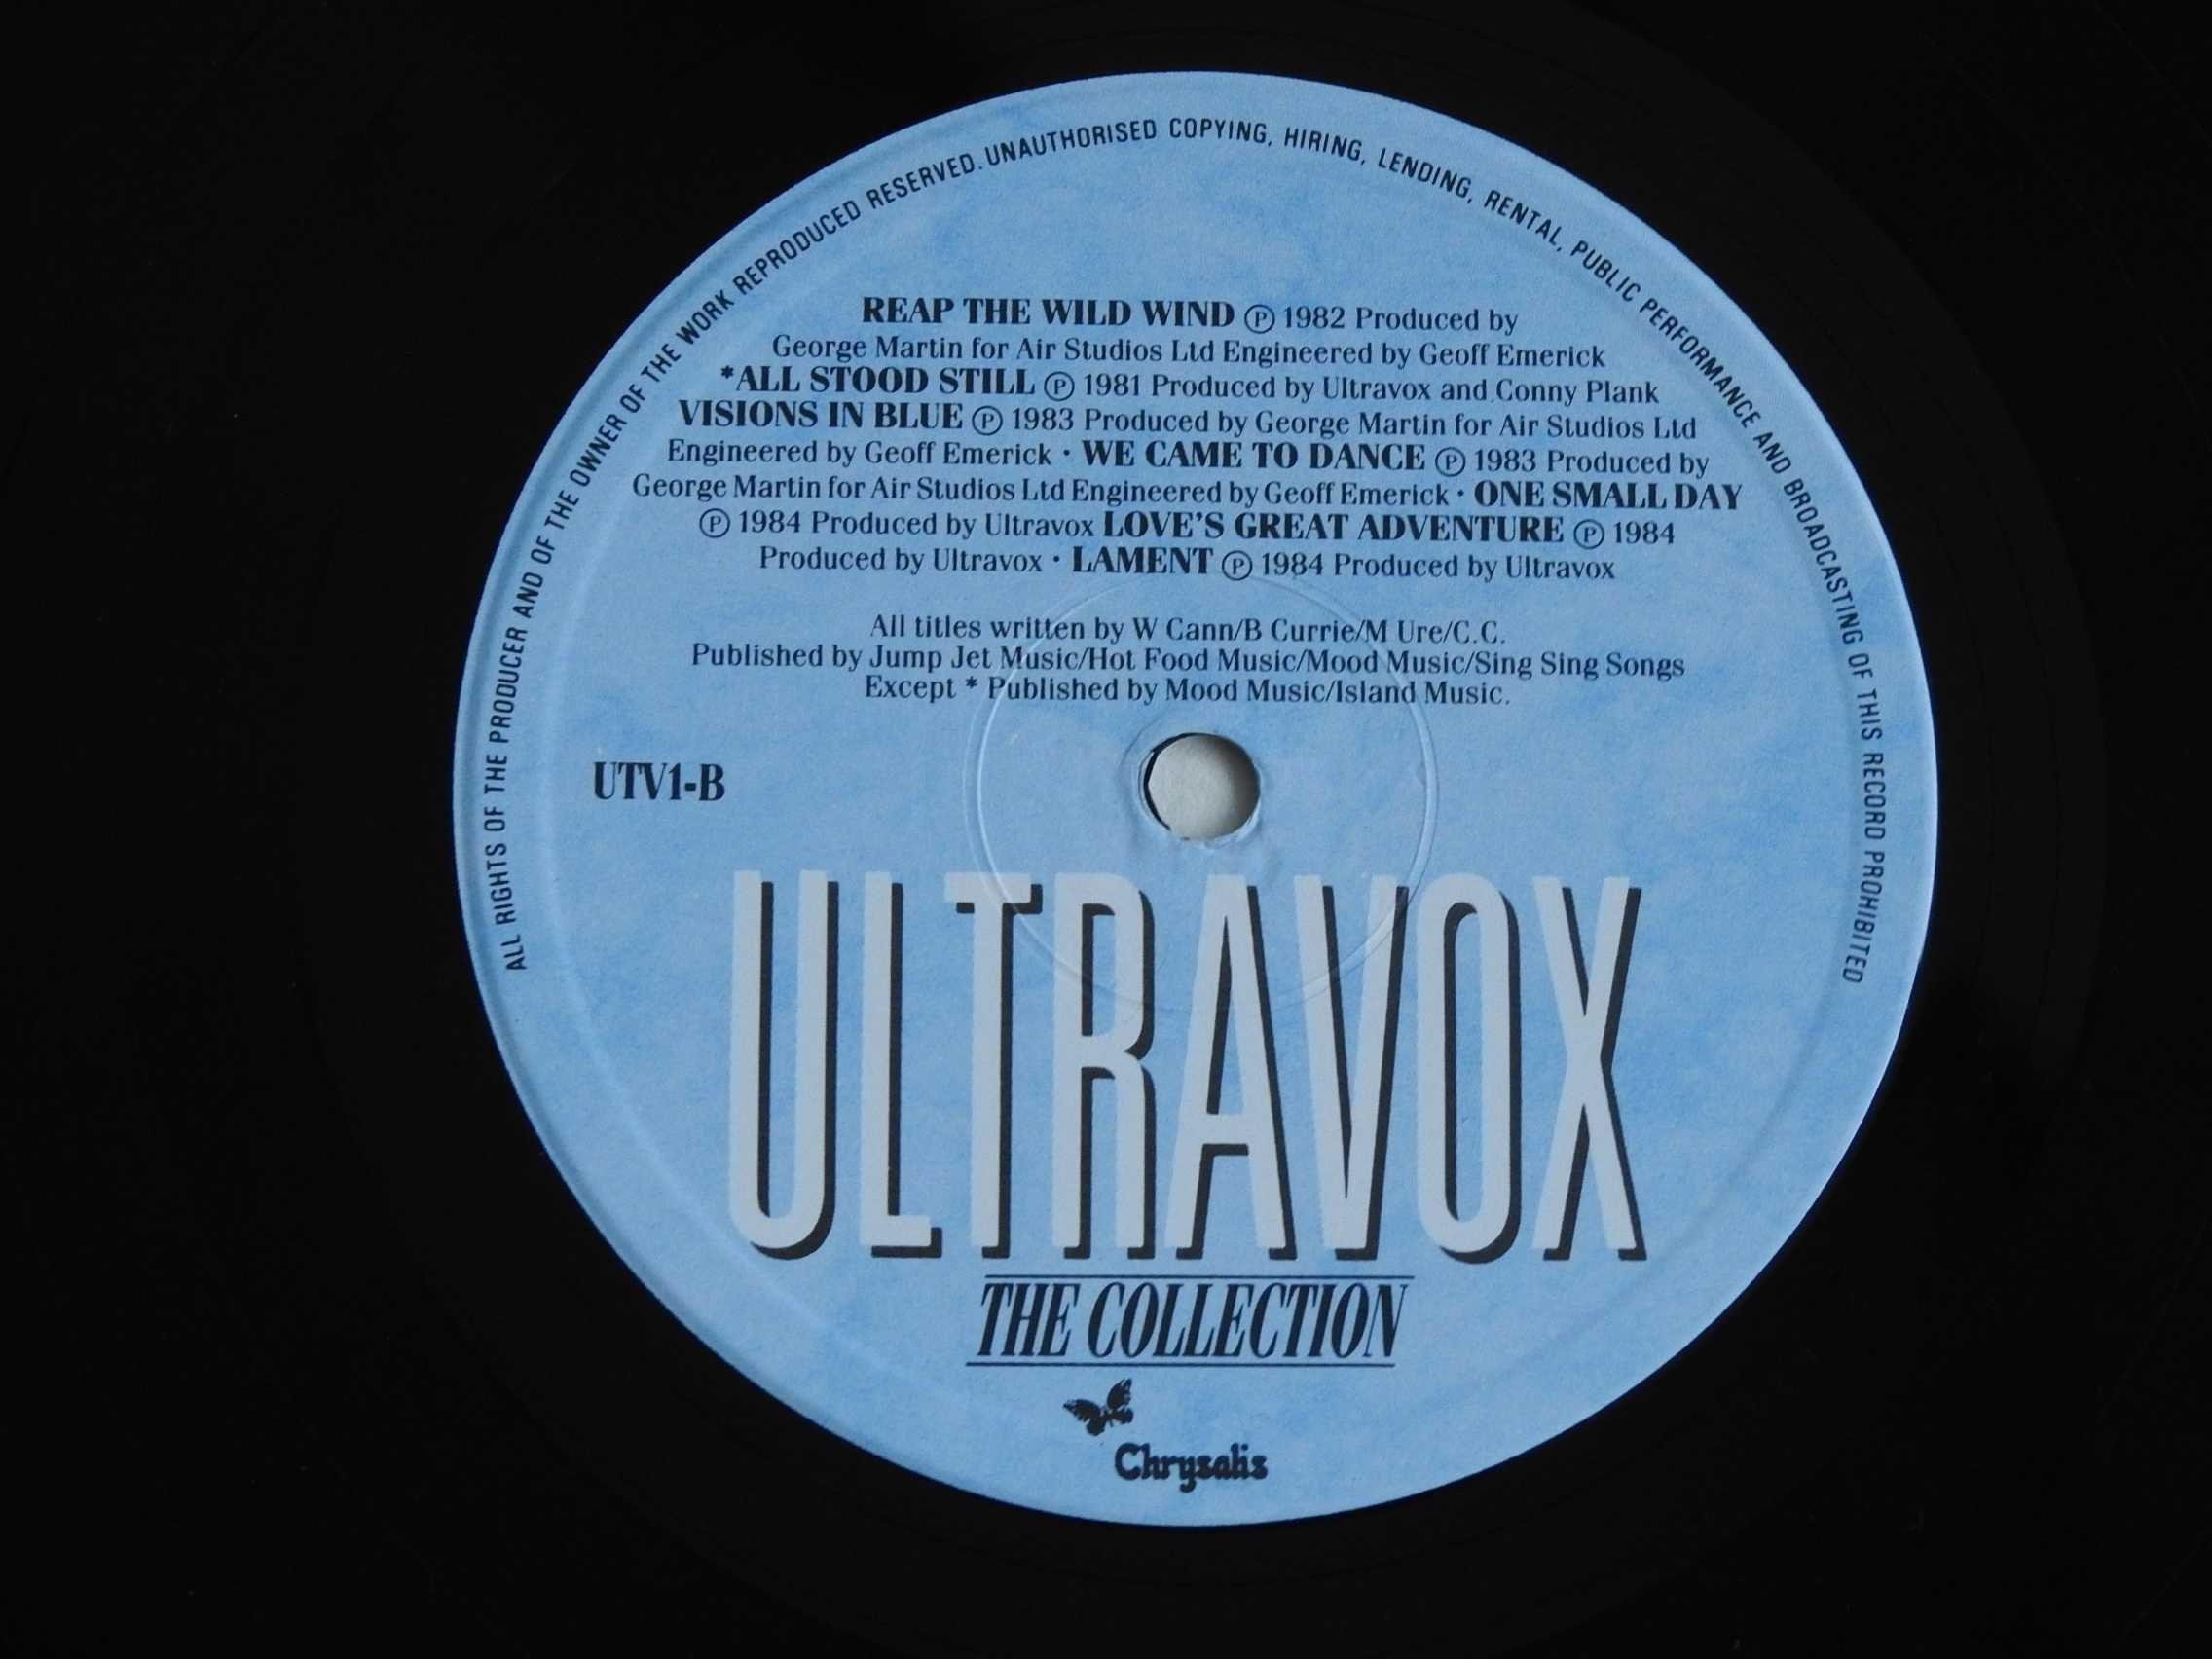 Ultravox The Collection LP 1984 UK пластинка VG+ Британия 1press ориги